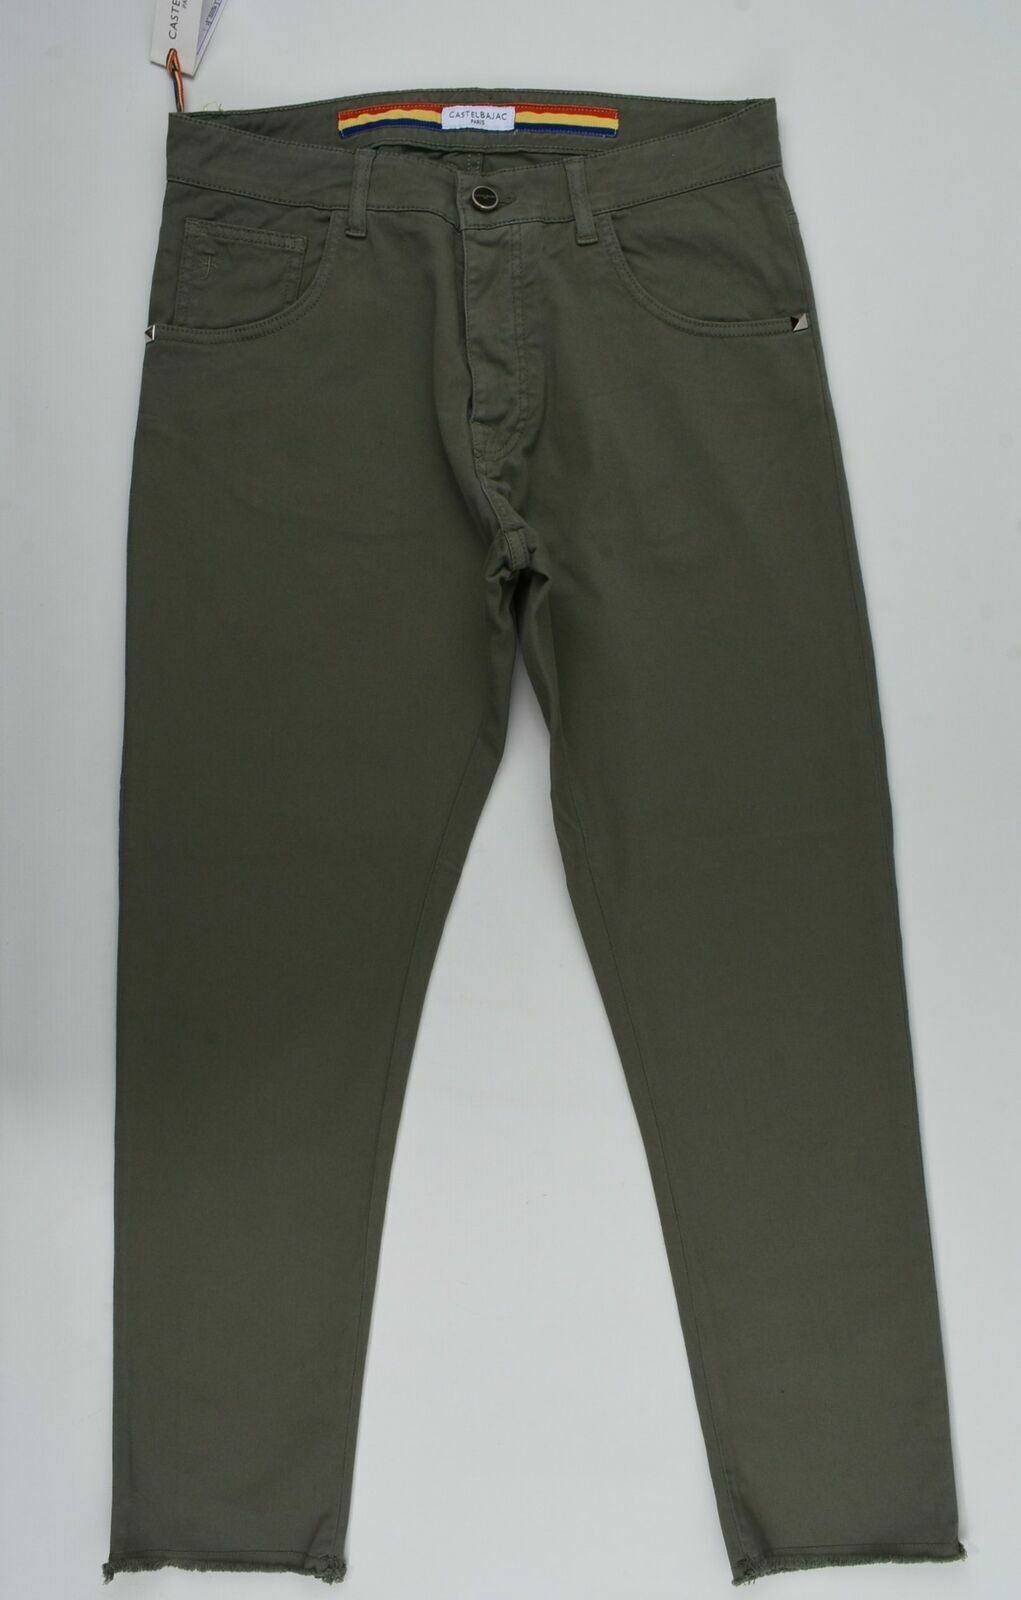 CASTELBAJAC Men's Slim Fit Khaki Green Jeans size W33